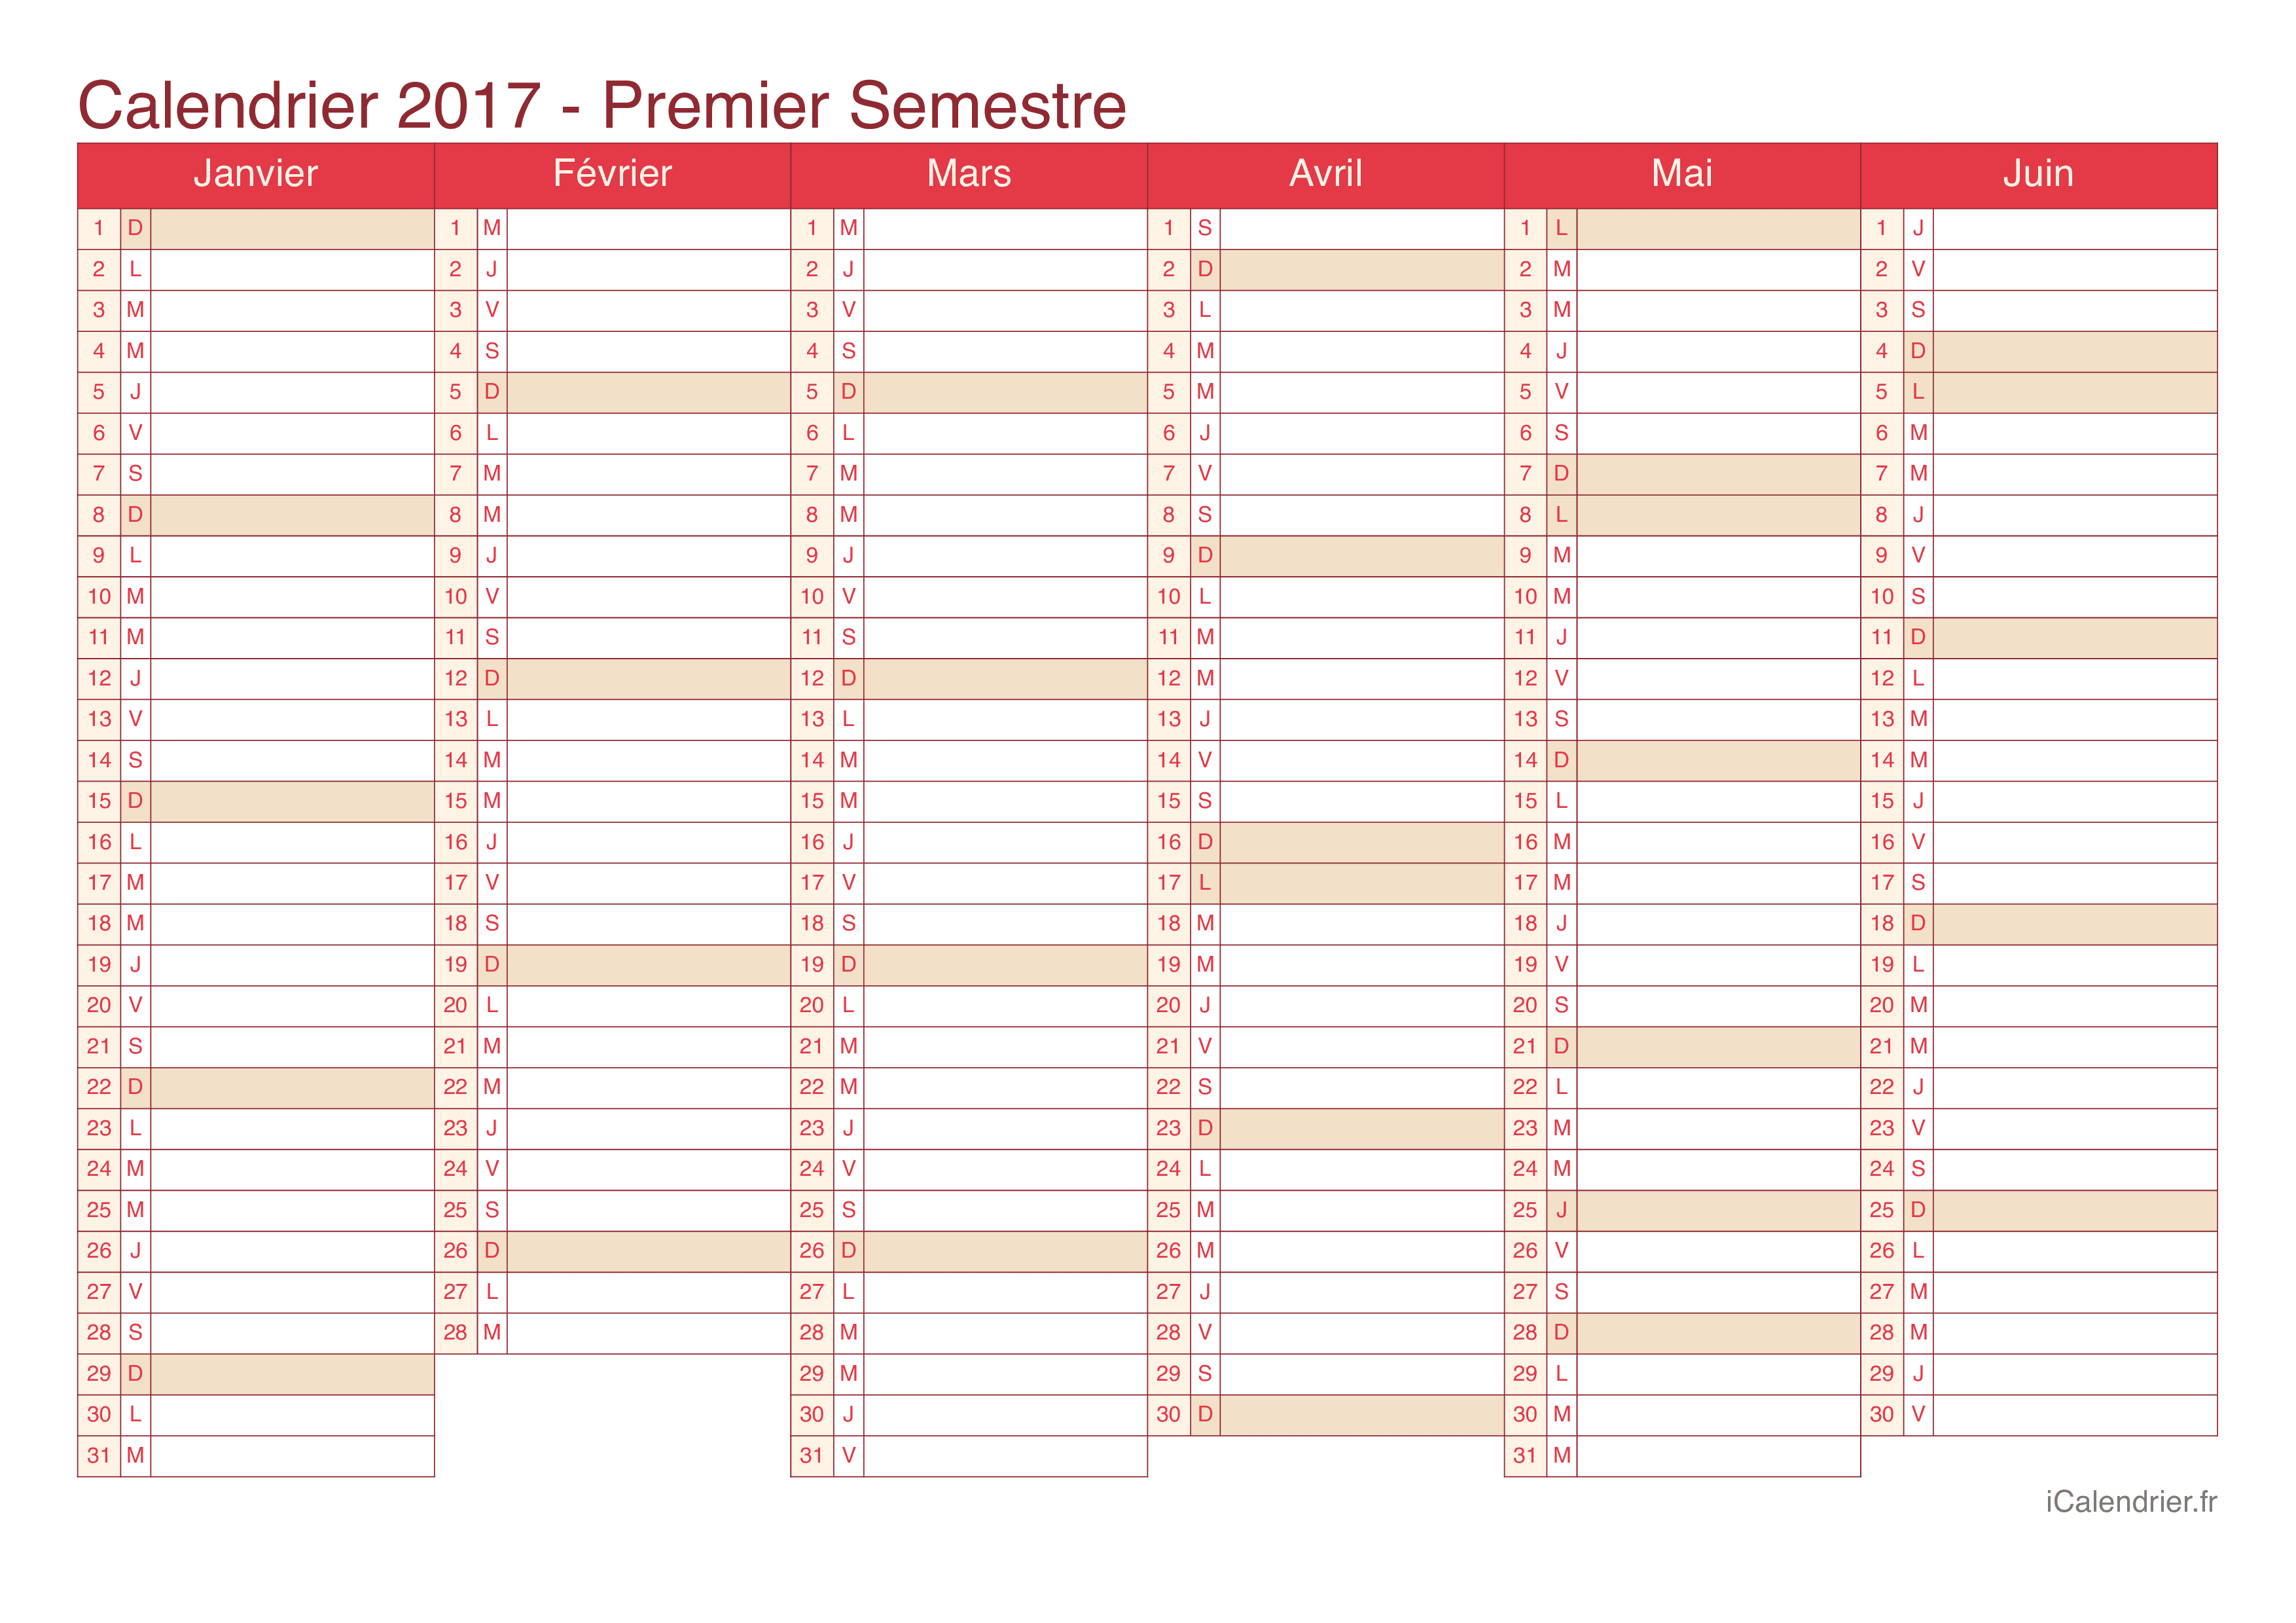 Calendrier par semestre 2017 - Cherry